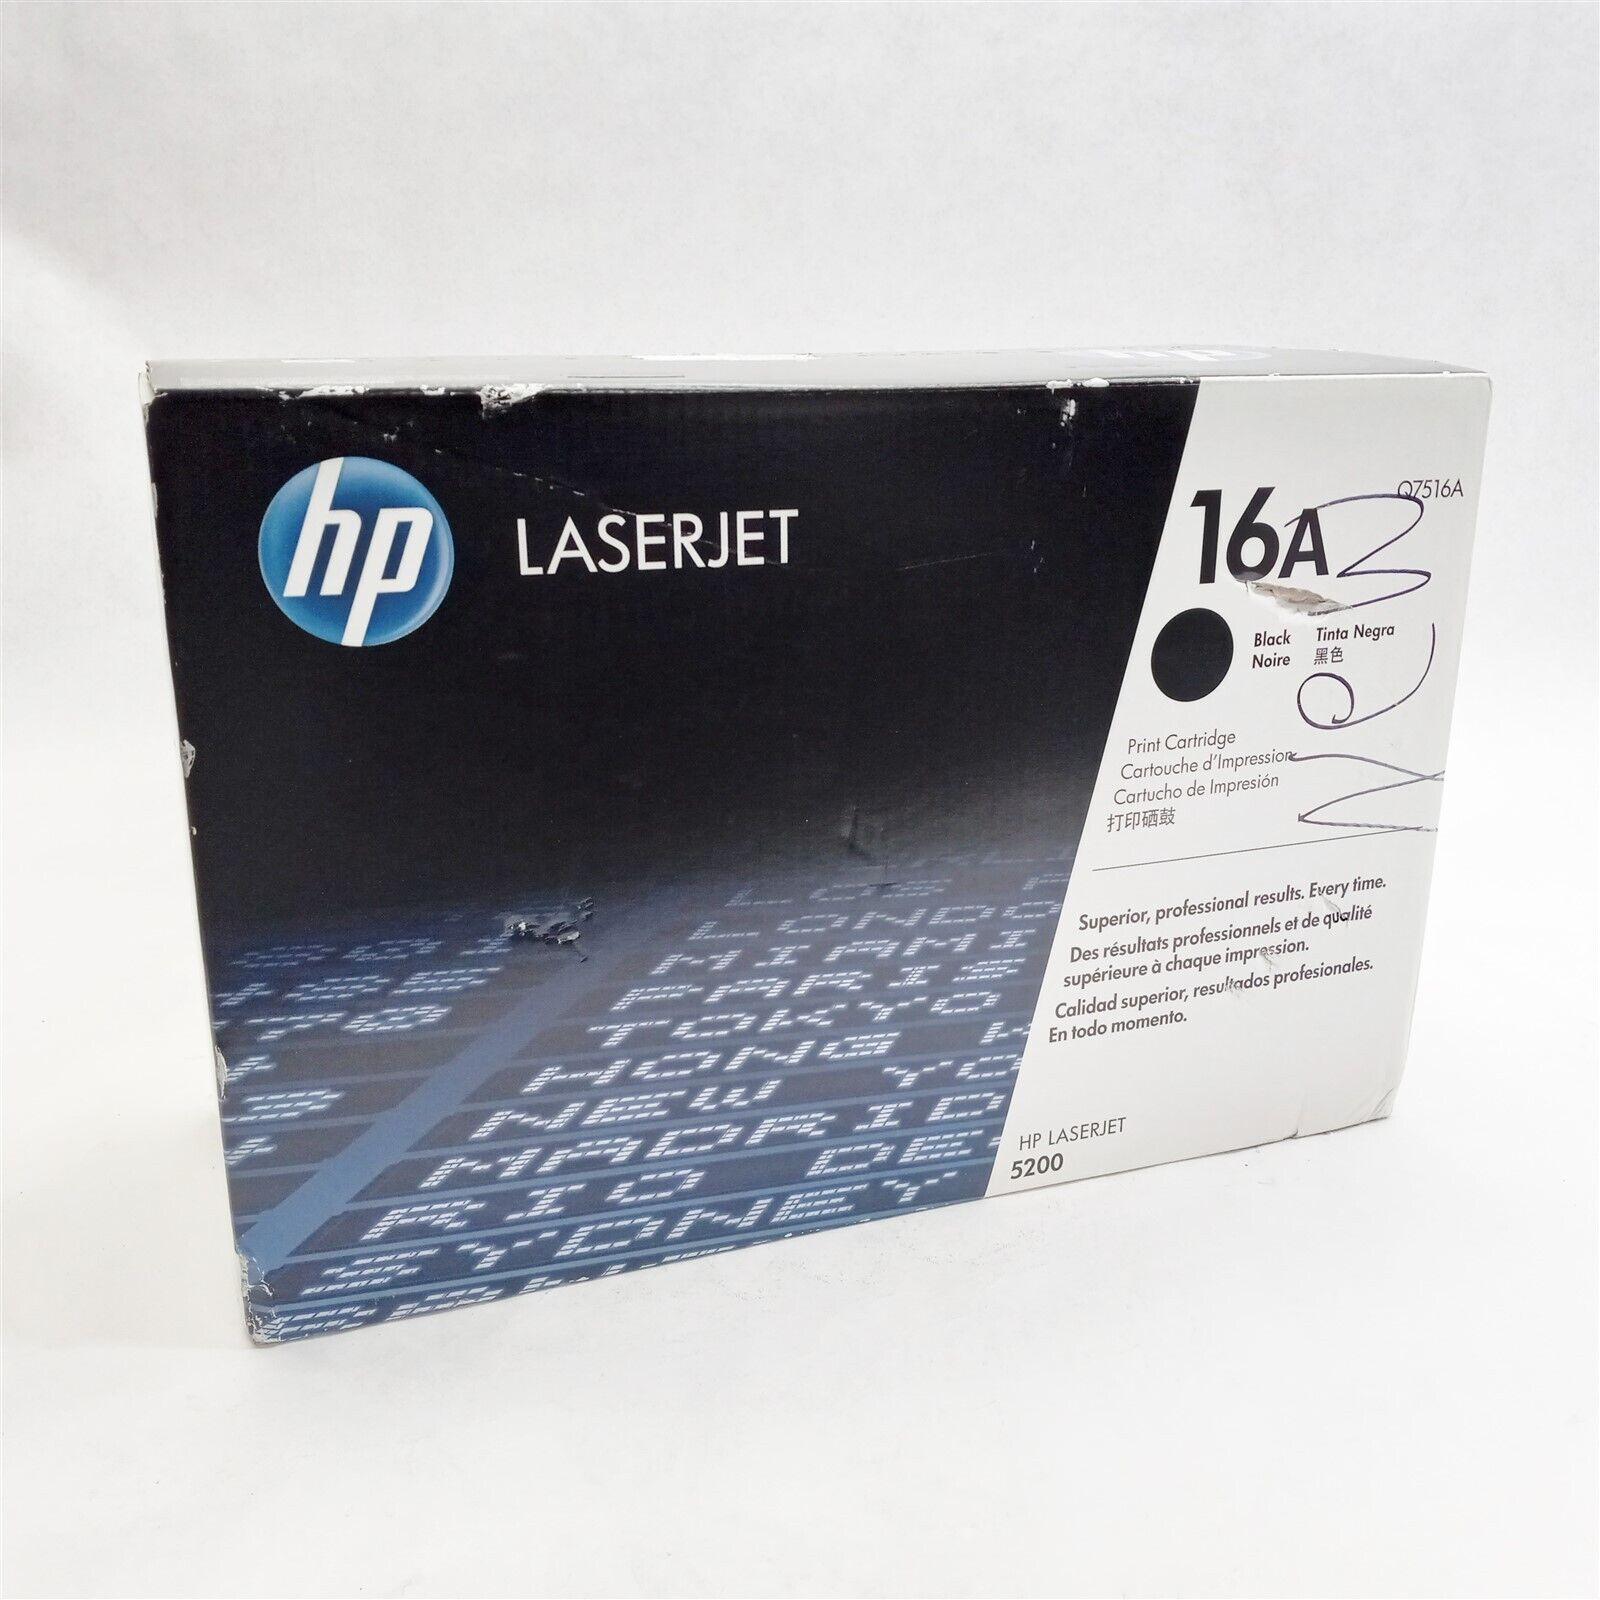 HP LaserJet 16A Q7516A Genuine New Sealed Black Printer Toner Ink Cartridge